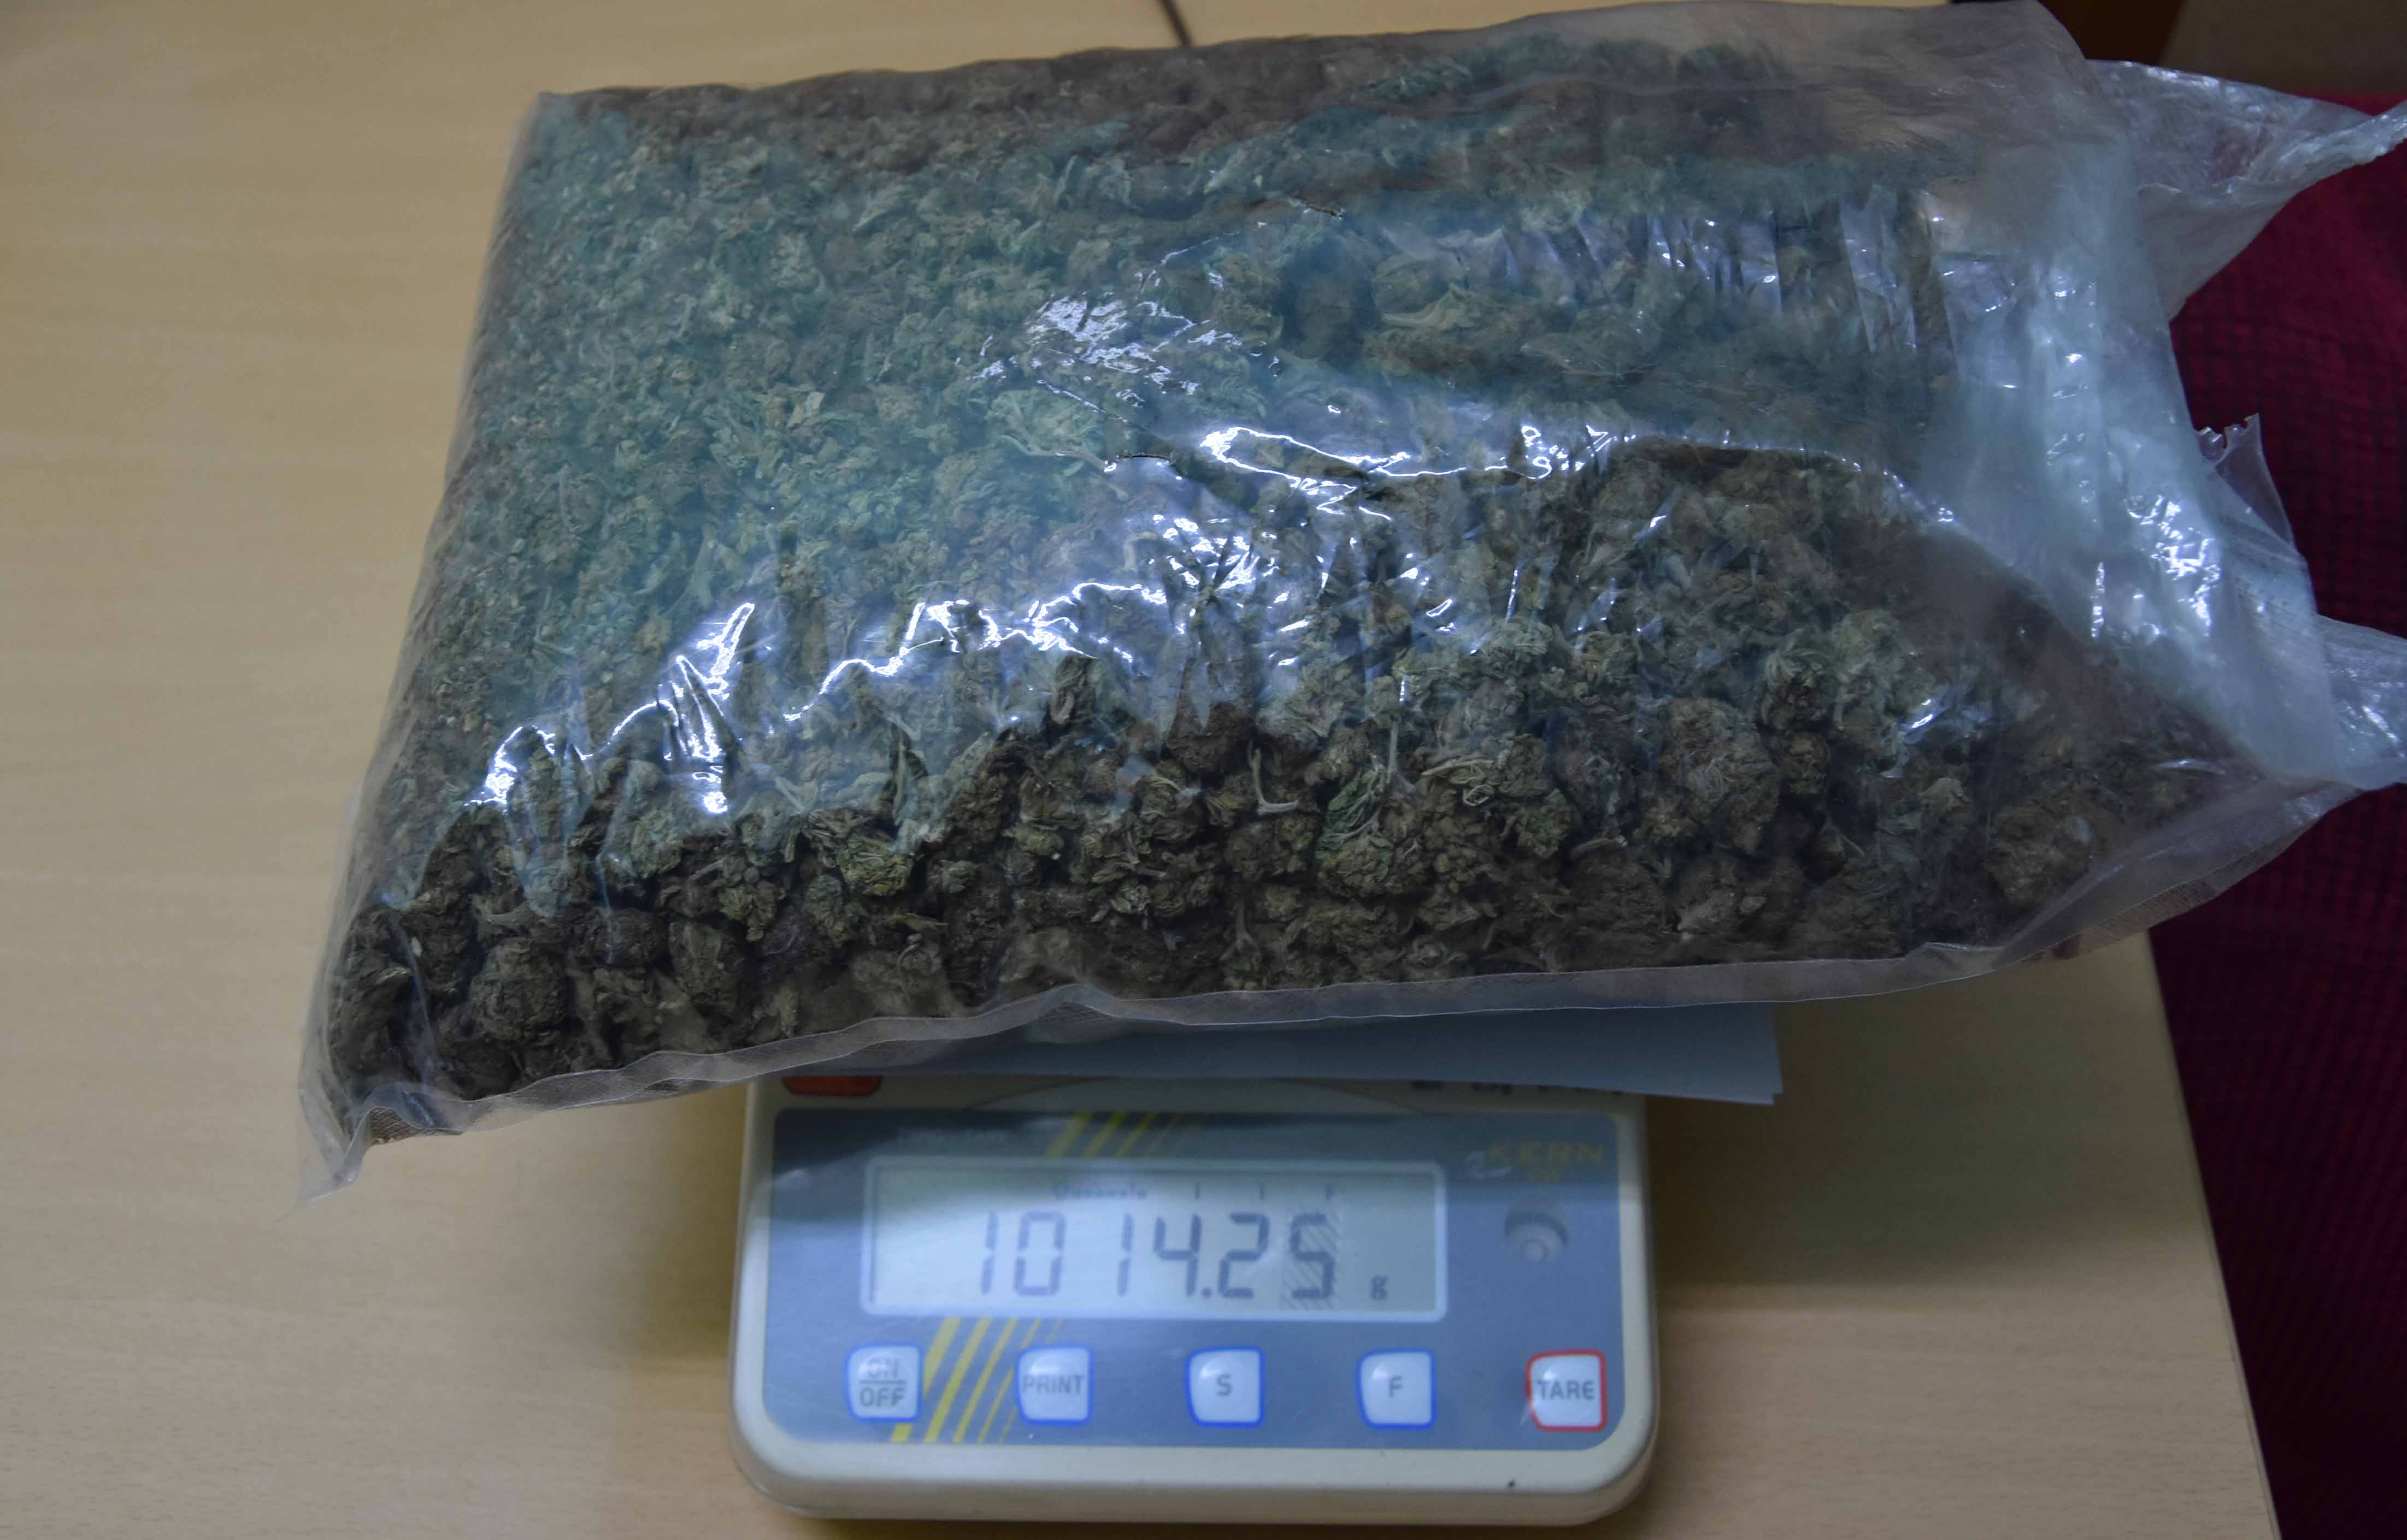 Zaplenjen kilogram marihuane